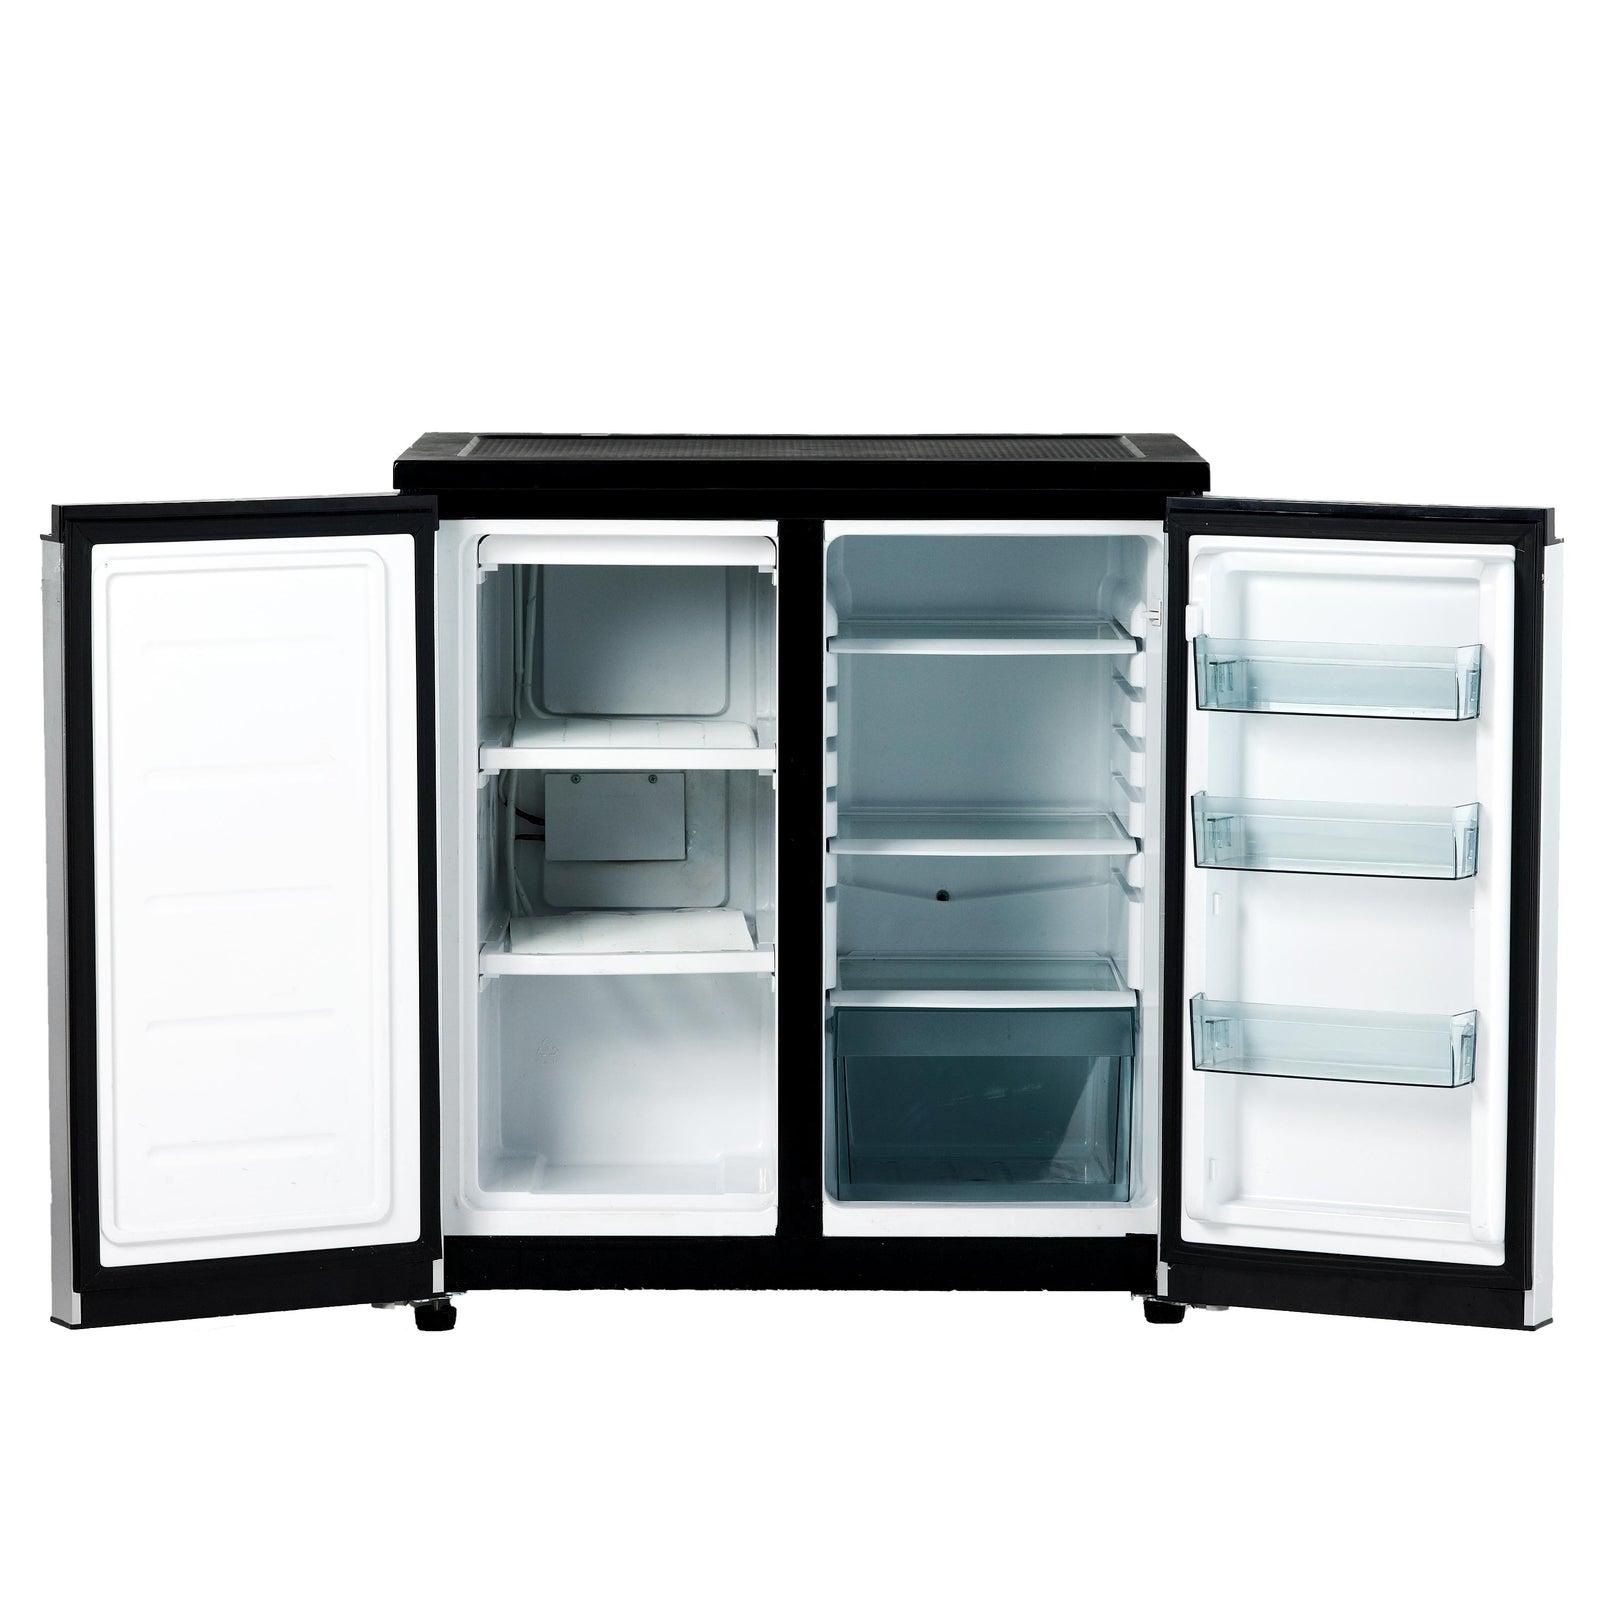 Avanti 5.5 cu. ft. Compact Refrigerator - Stainless Steel / 5.5 cu. ft.